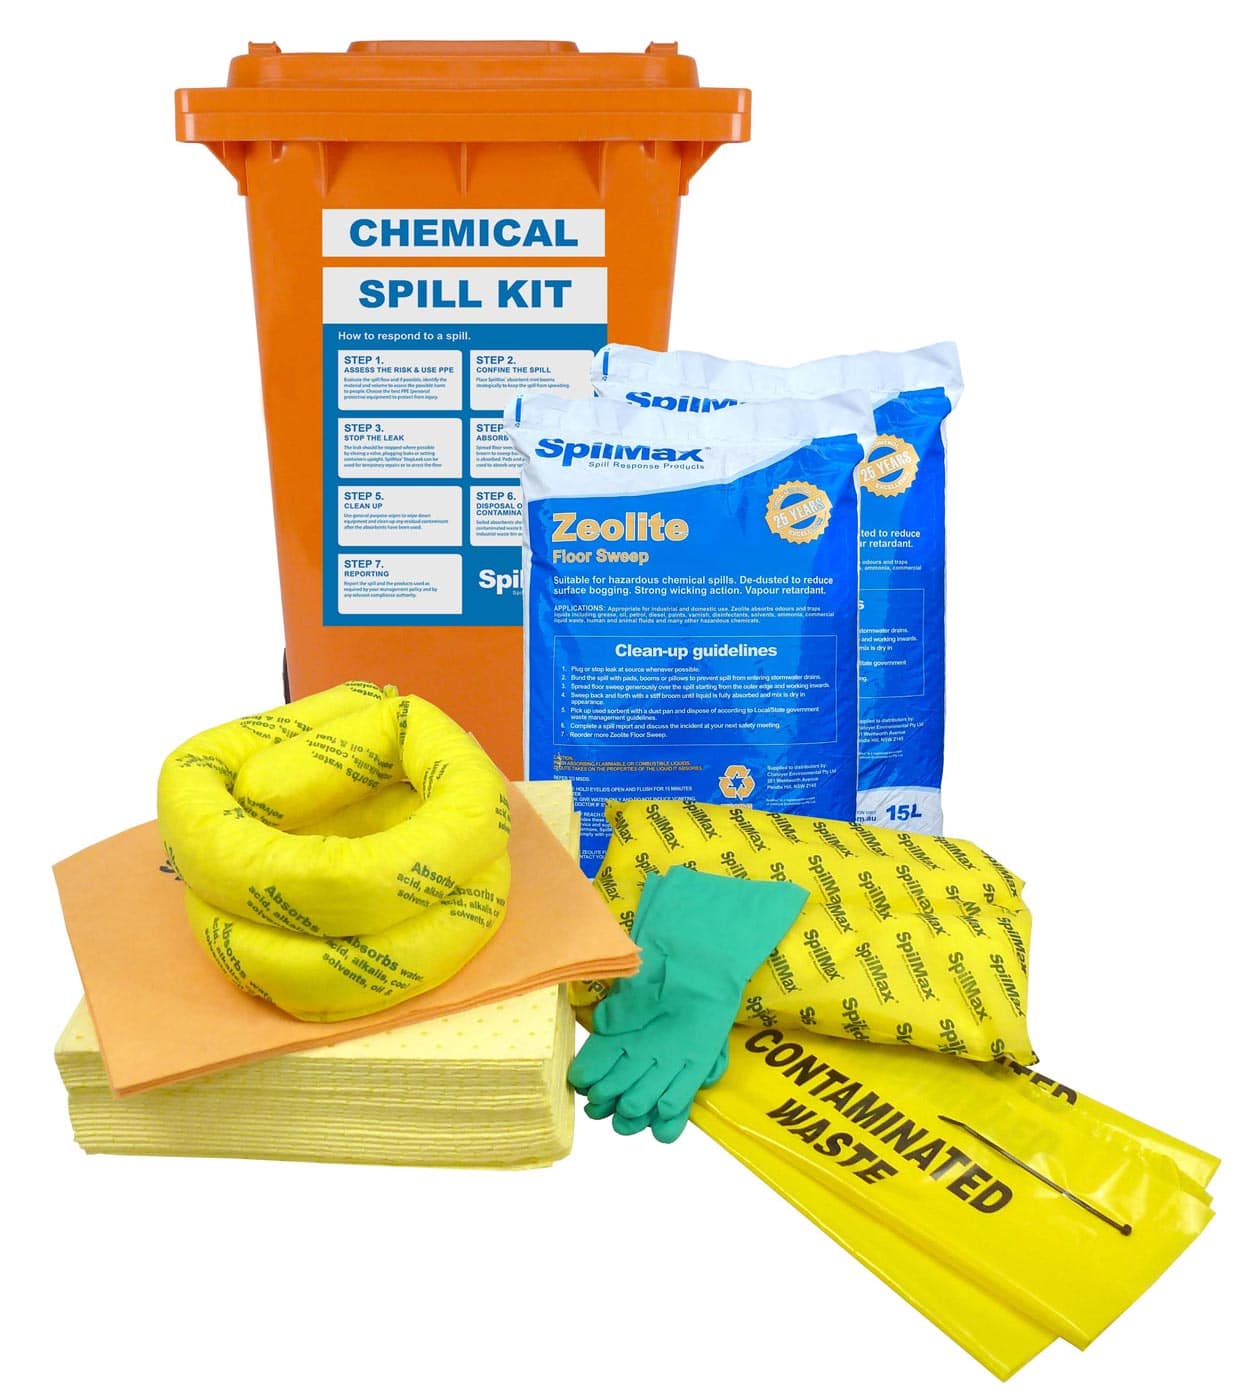 CHZW3 SpilMax 140L Chemical Spill Kit with Zeolite Floor Sweep